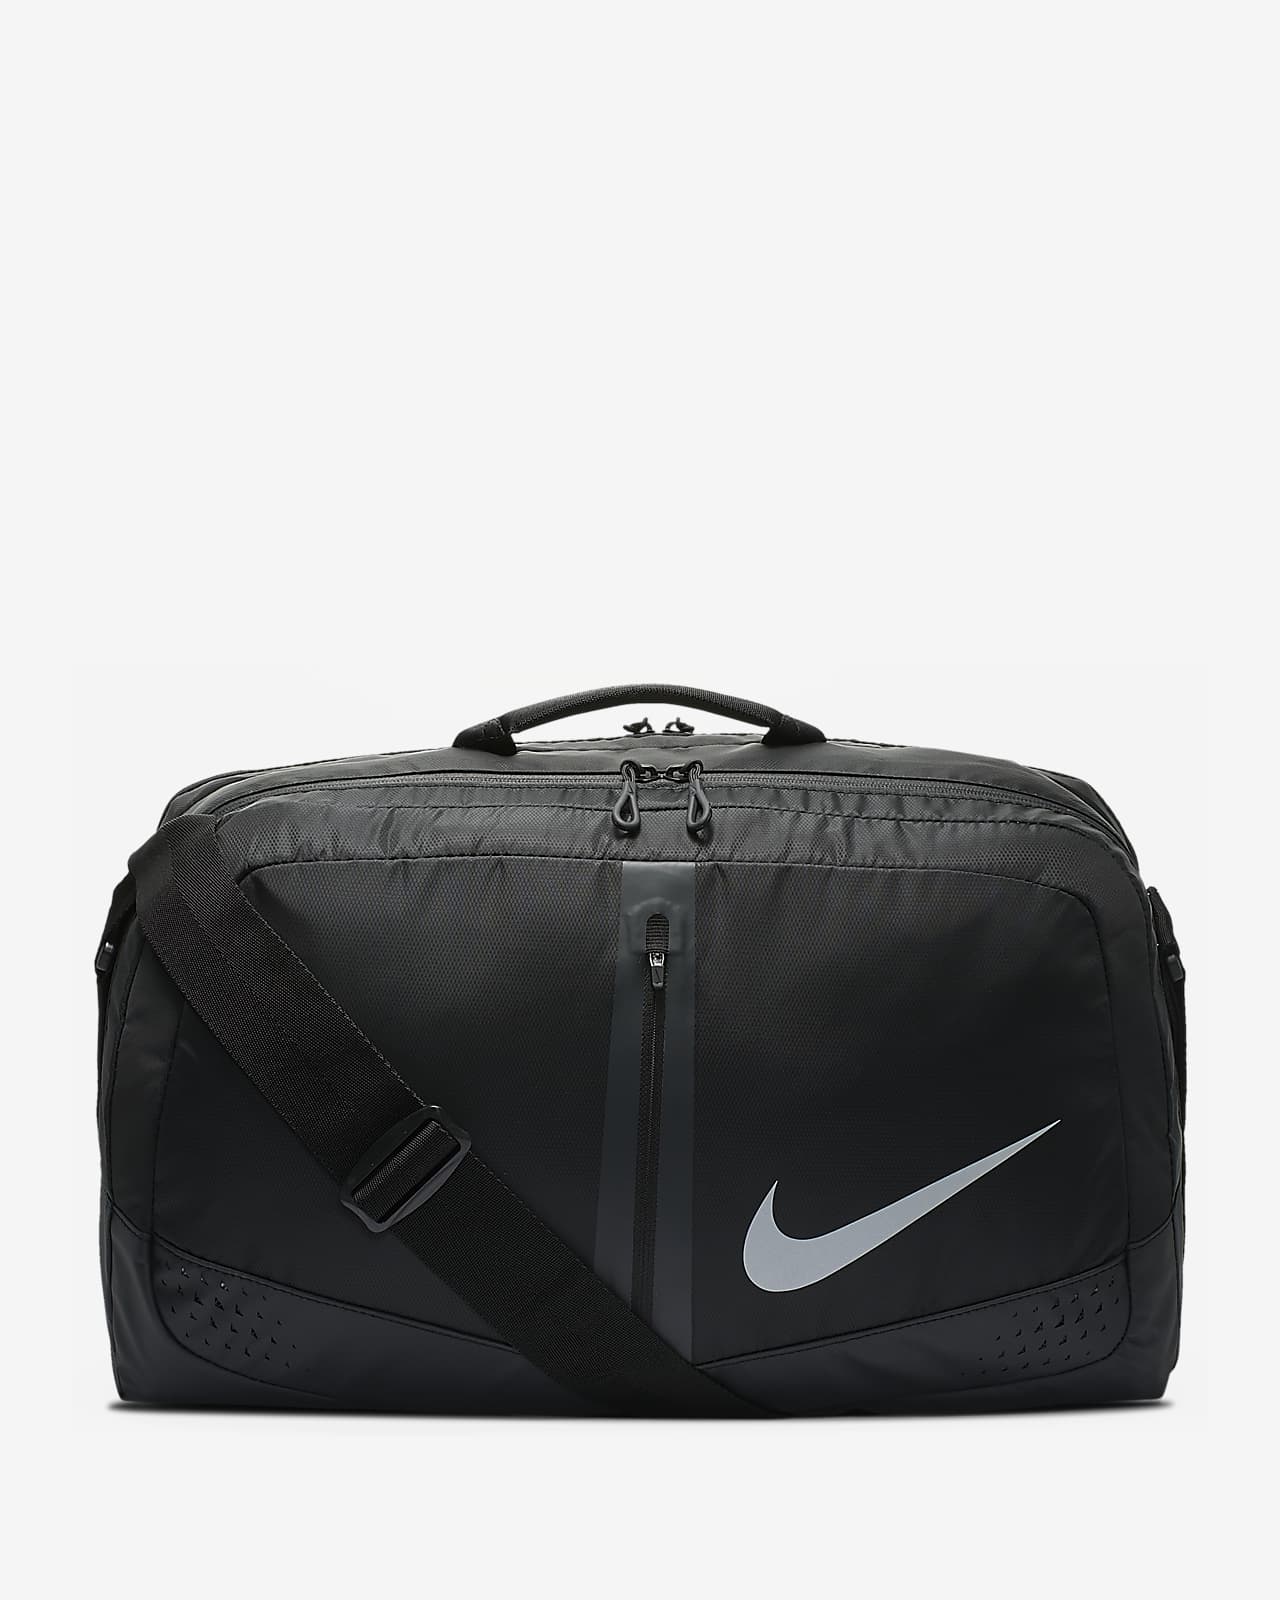 Nike Run Duffel Bag. www.bagsaleusa.com